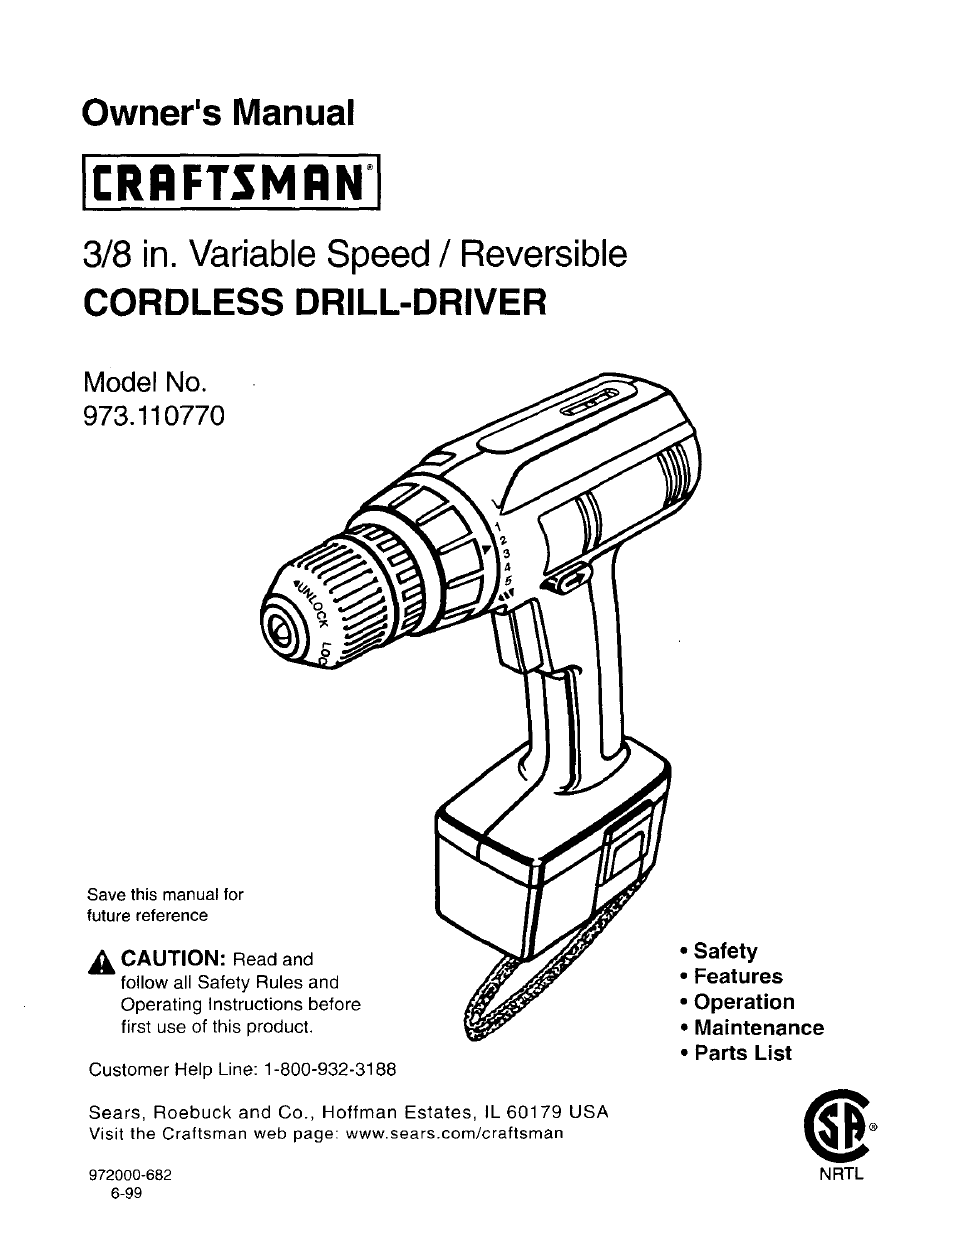 Craftsman 973.110770 User Manual | 16 pages